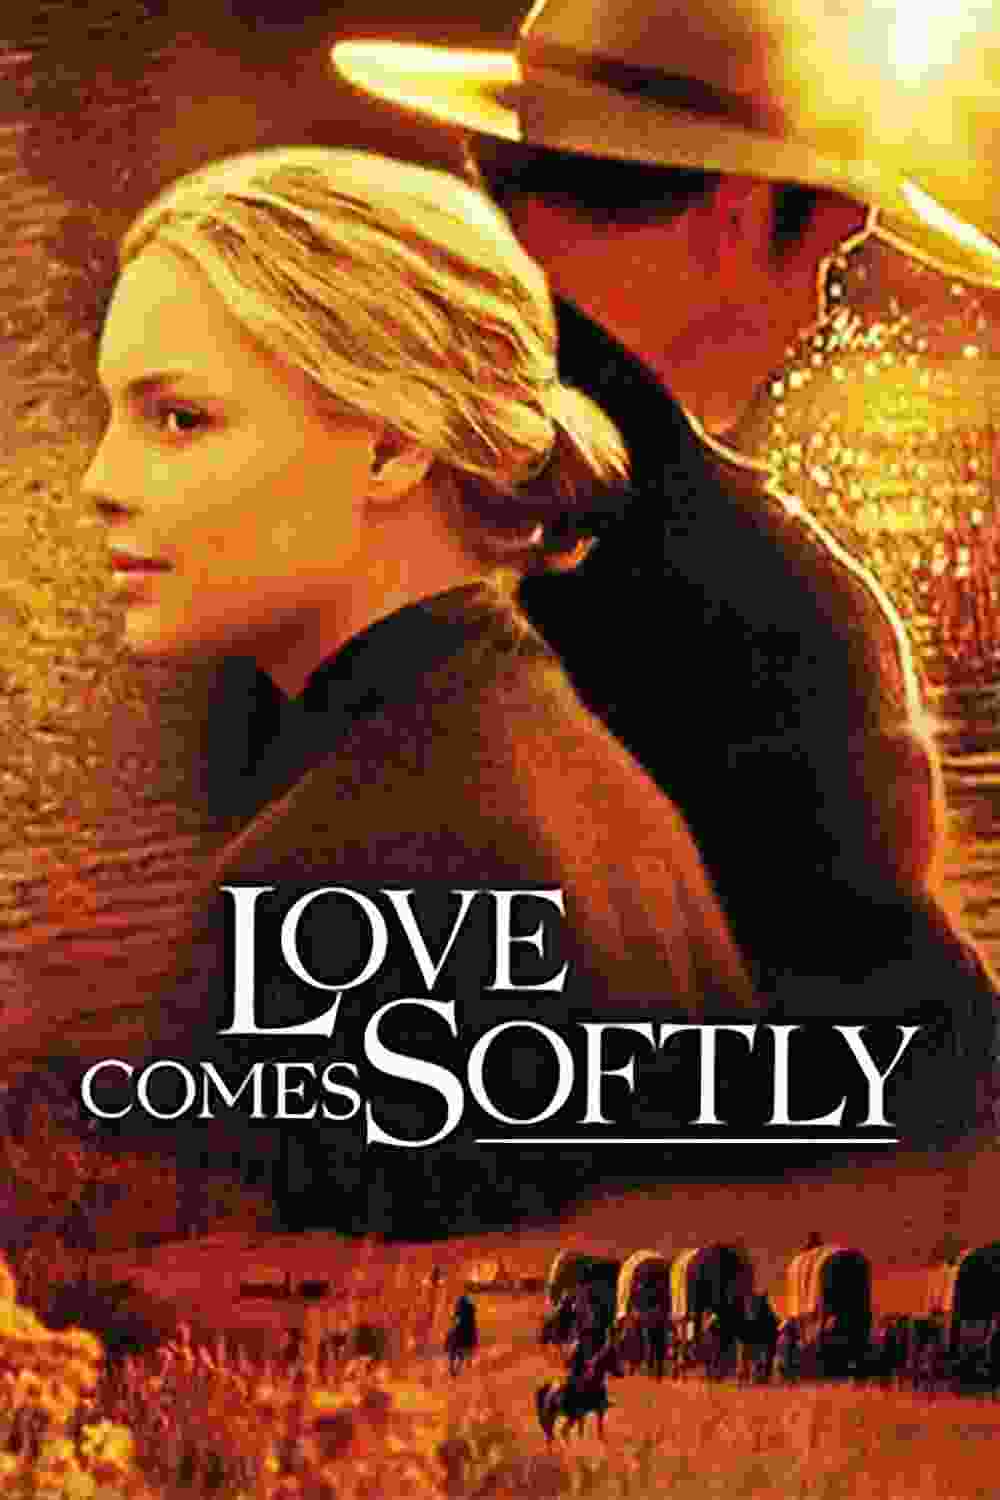 Love Comes Softly (2003) Katherine Heigl